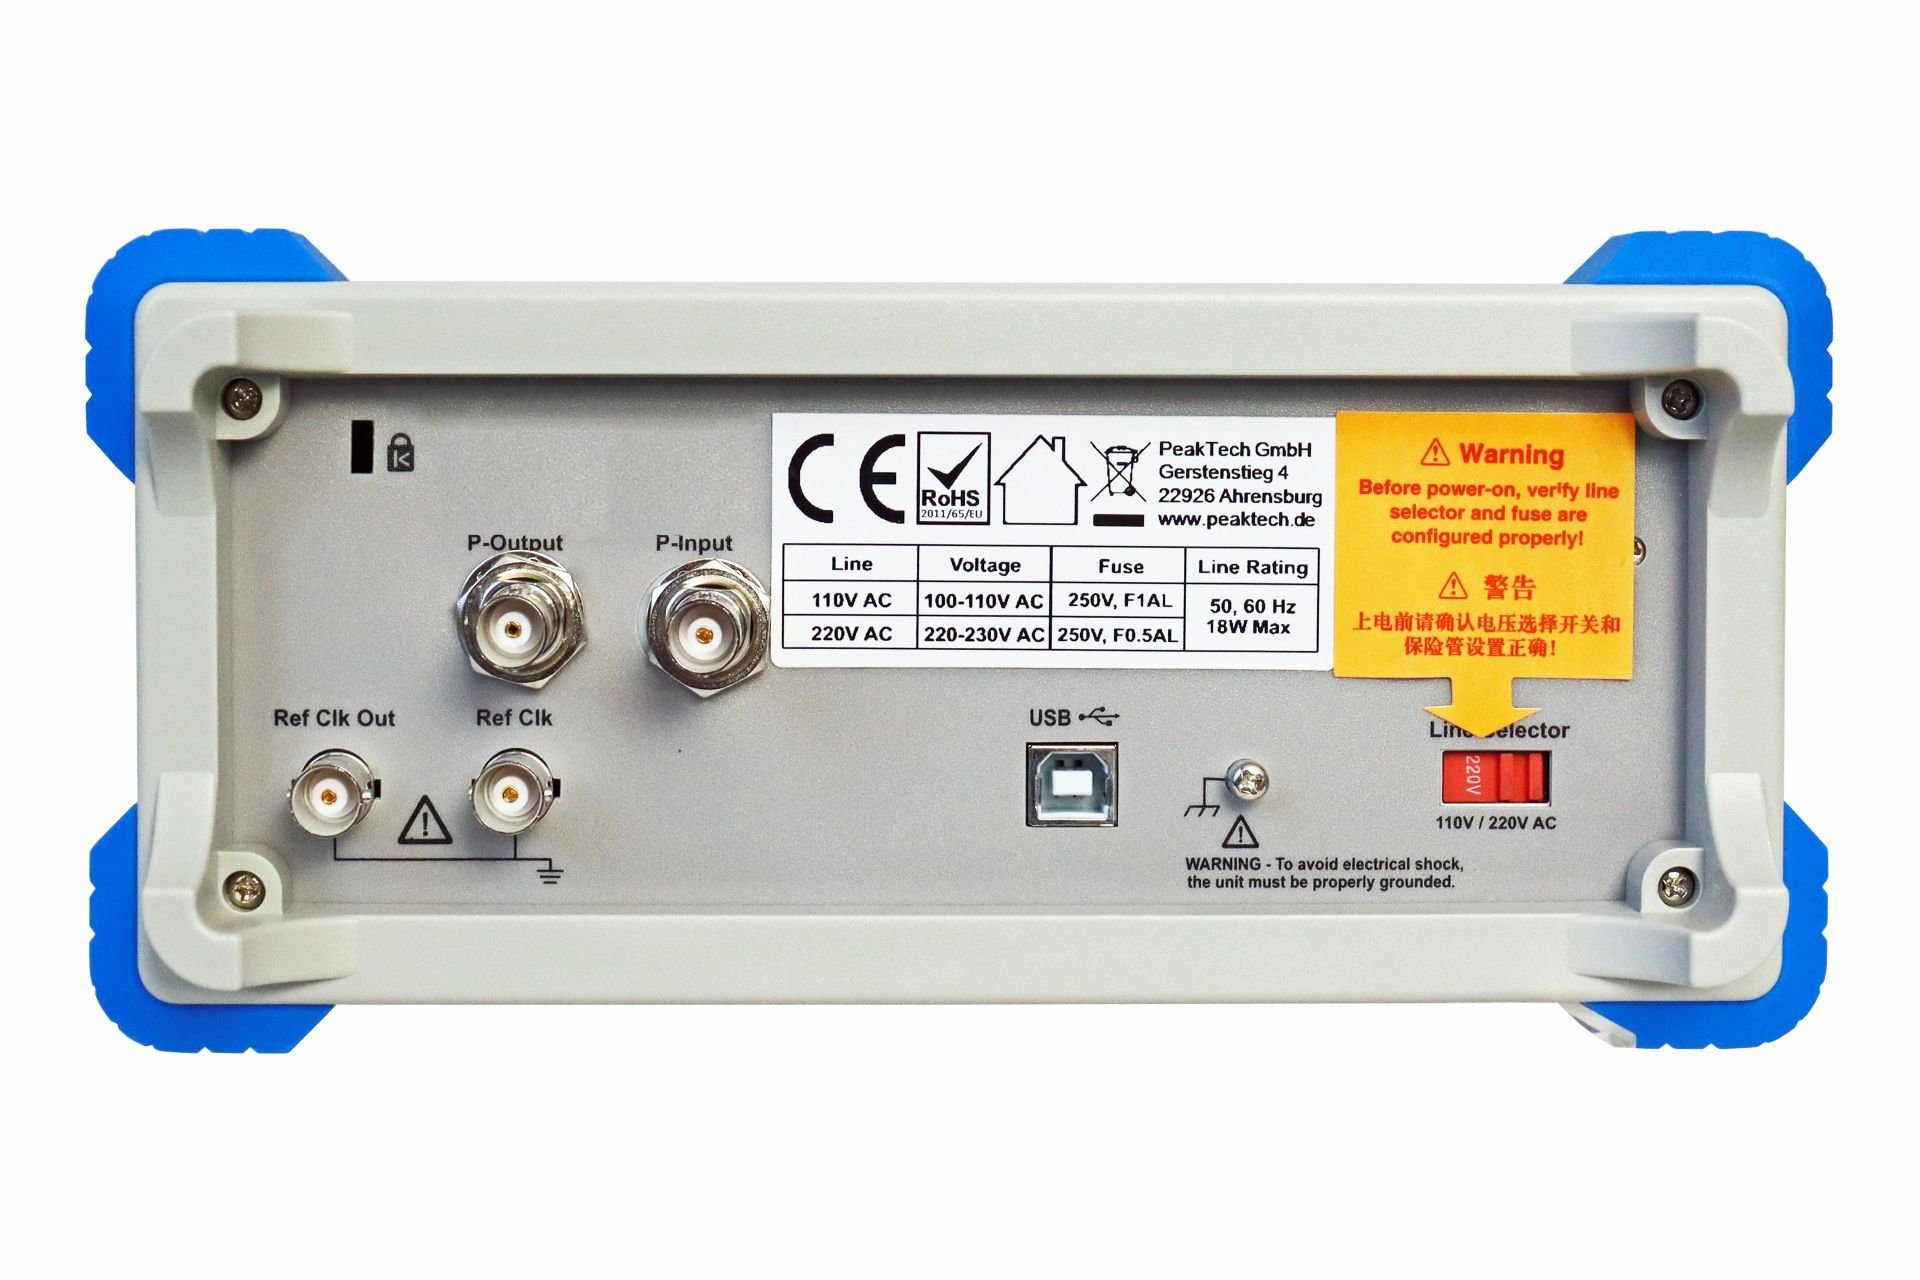 PeakTech (1 ~ 1 4124 - Spannungsprüfer A: Signalgenerator 2-Kanal St) µHz PeakTech MHz, Arbitär 10 P